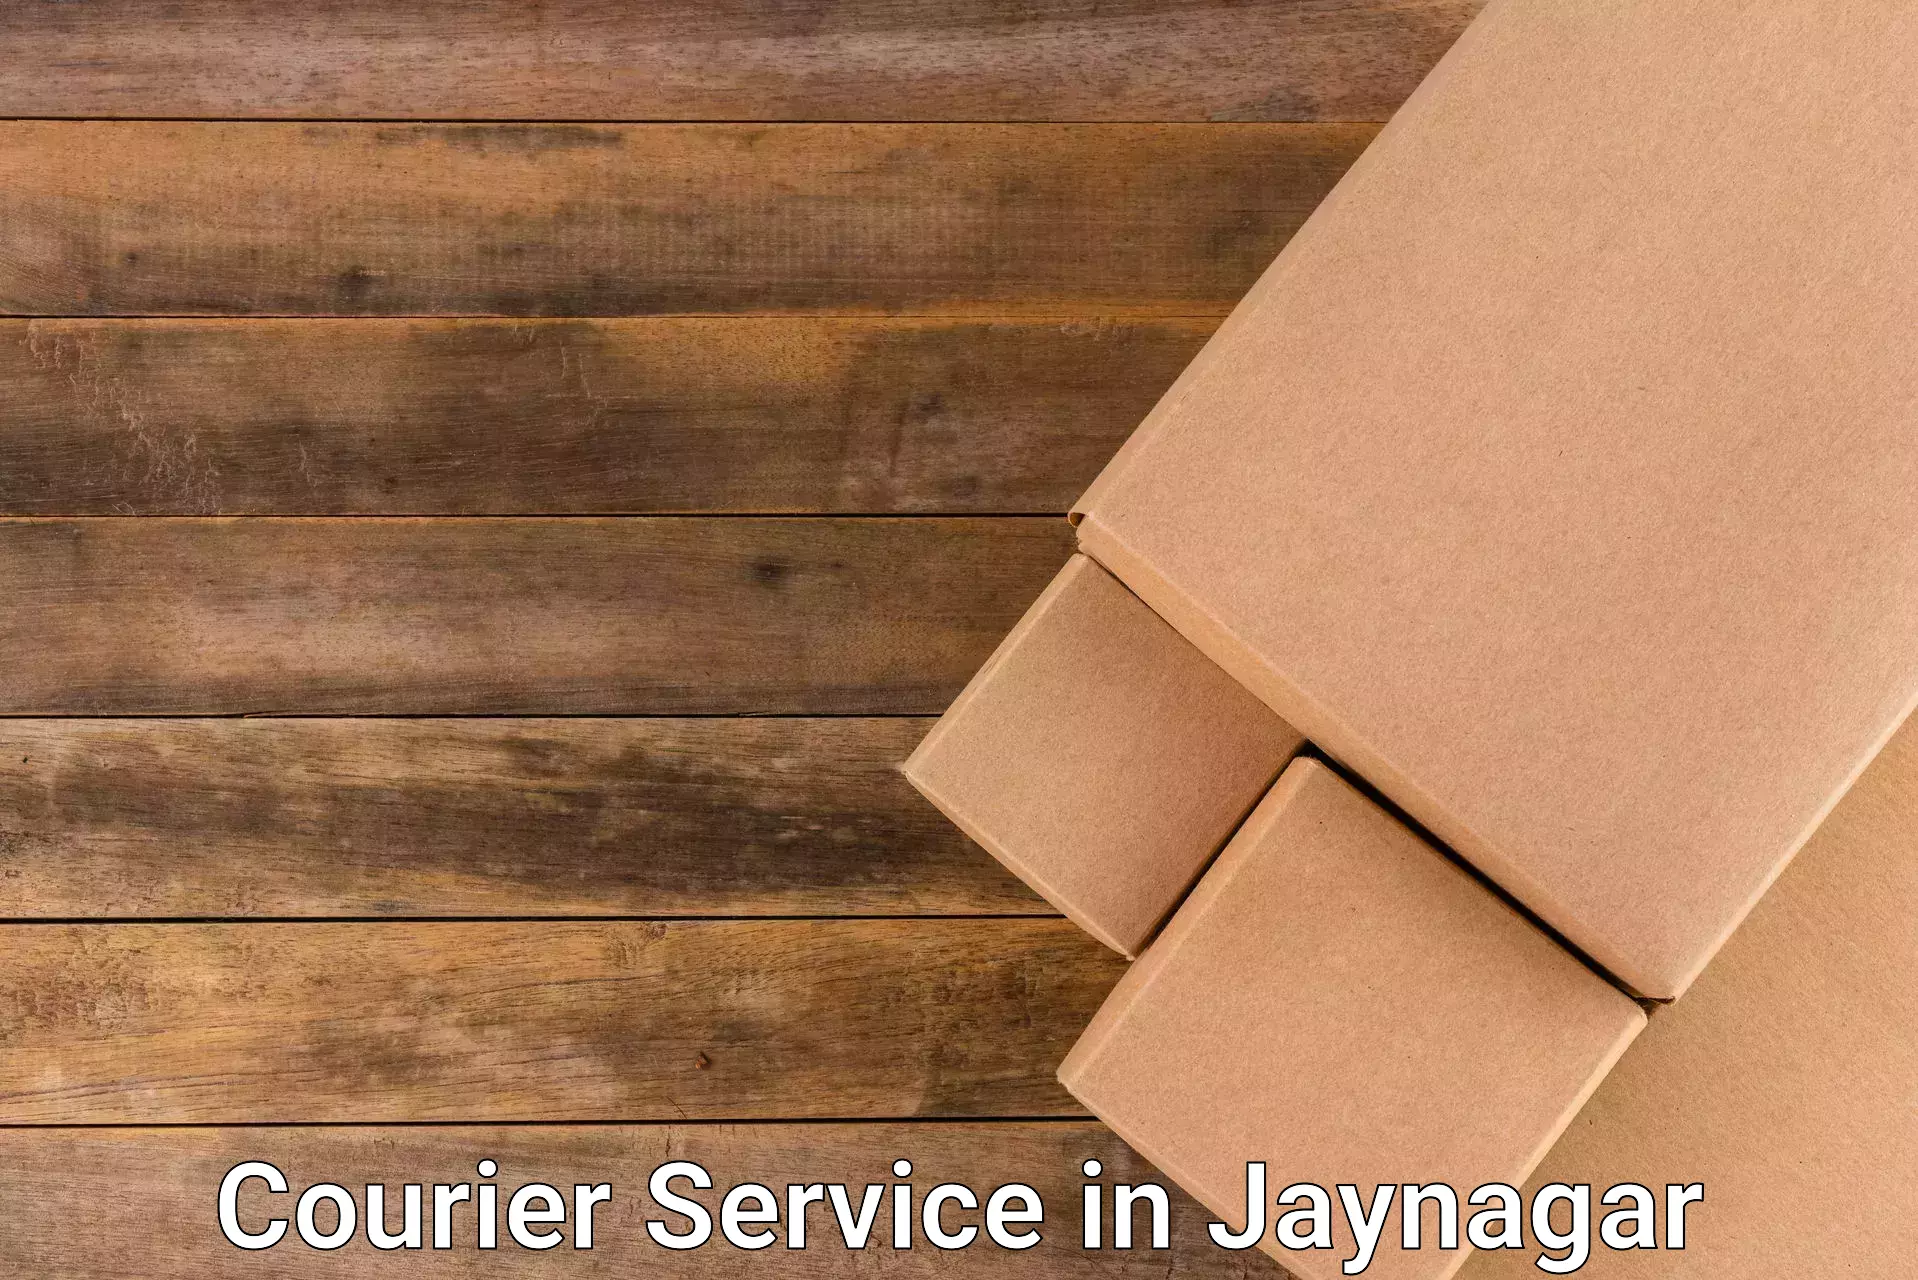 Diverse delivery methods in Jaynagar